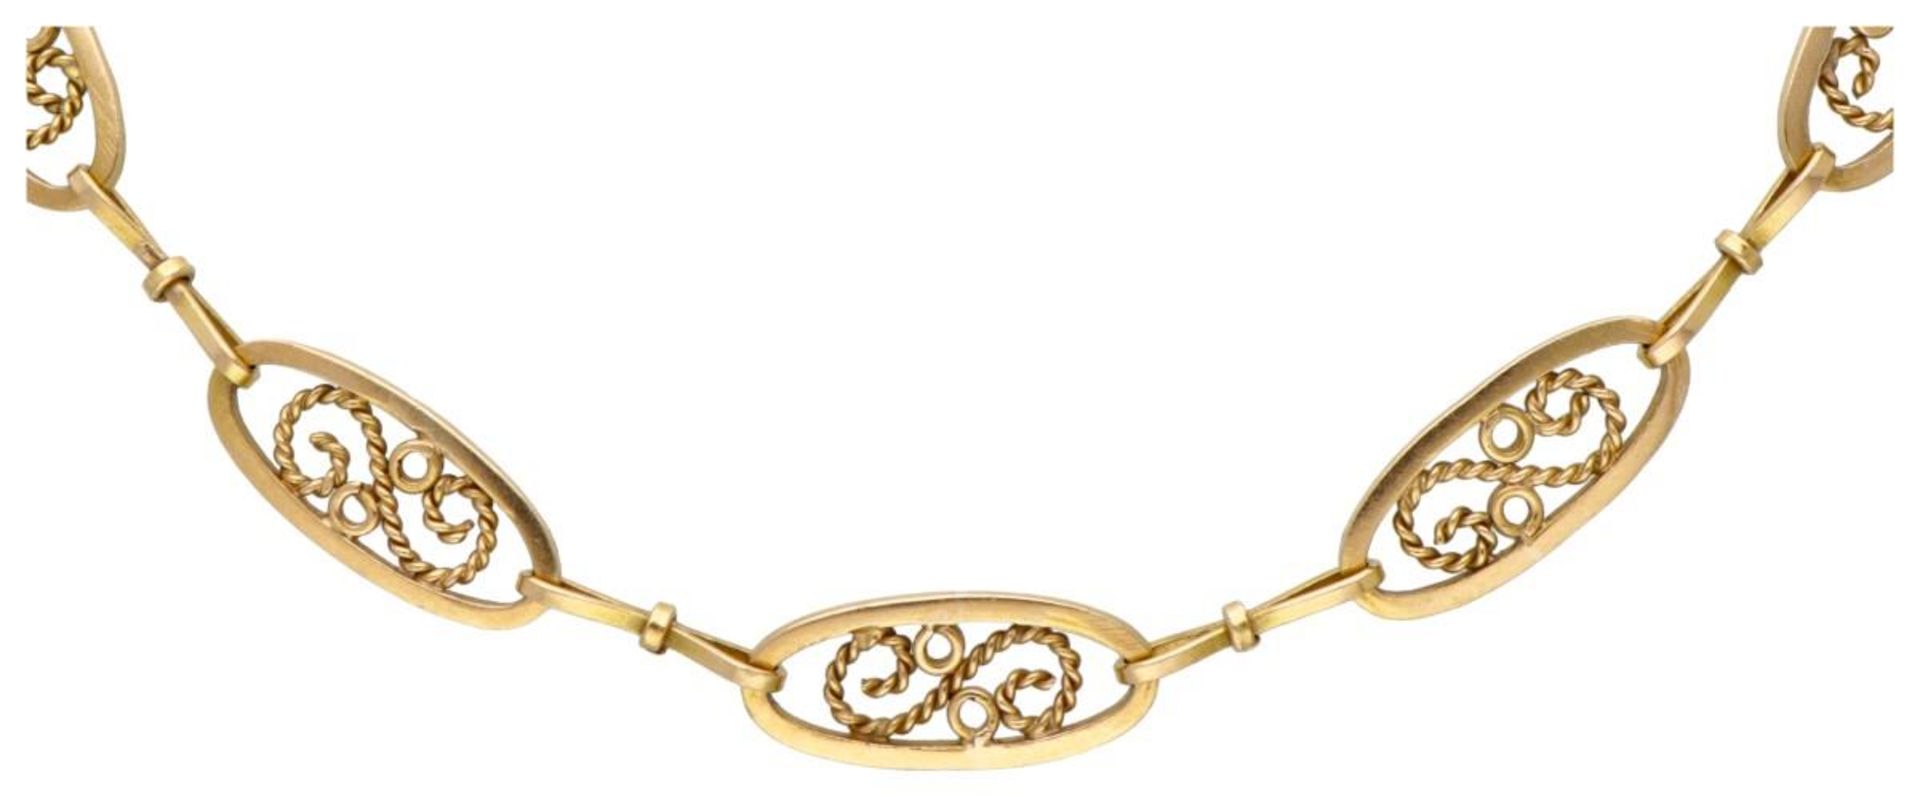 18K. Yellow gold Art Nouveau necklace with graceful details and navette-shaped links. - Bild 2 aus 3